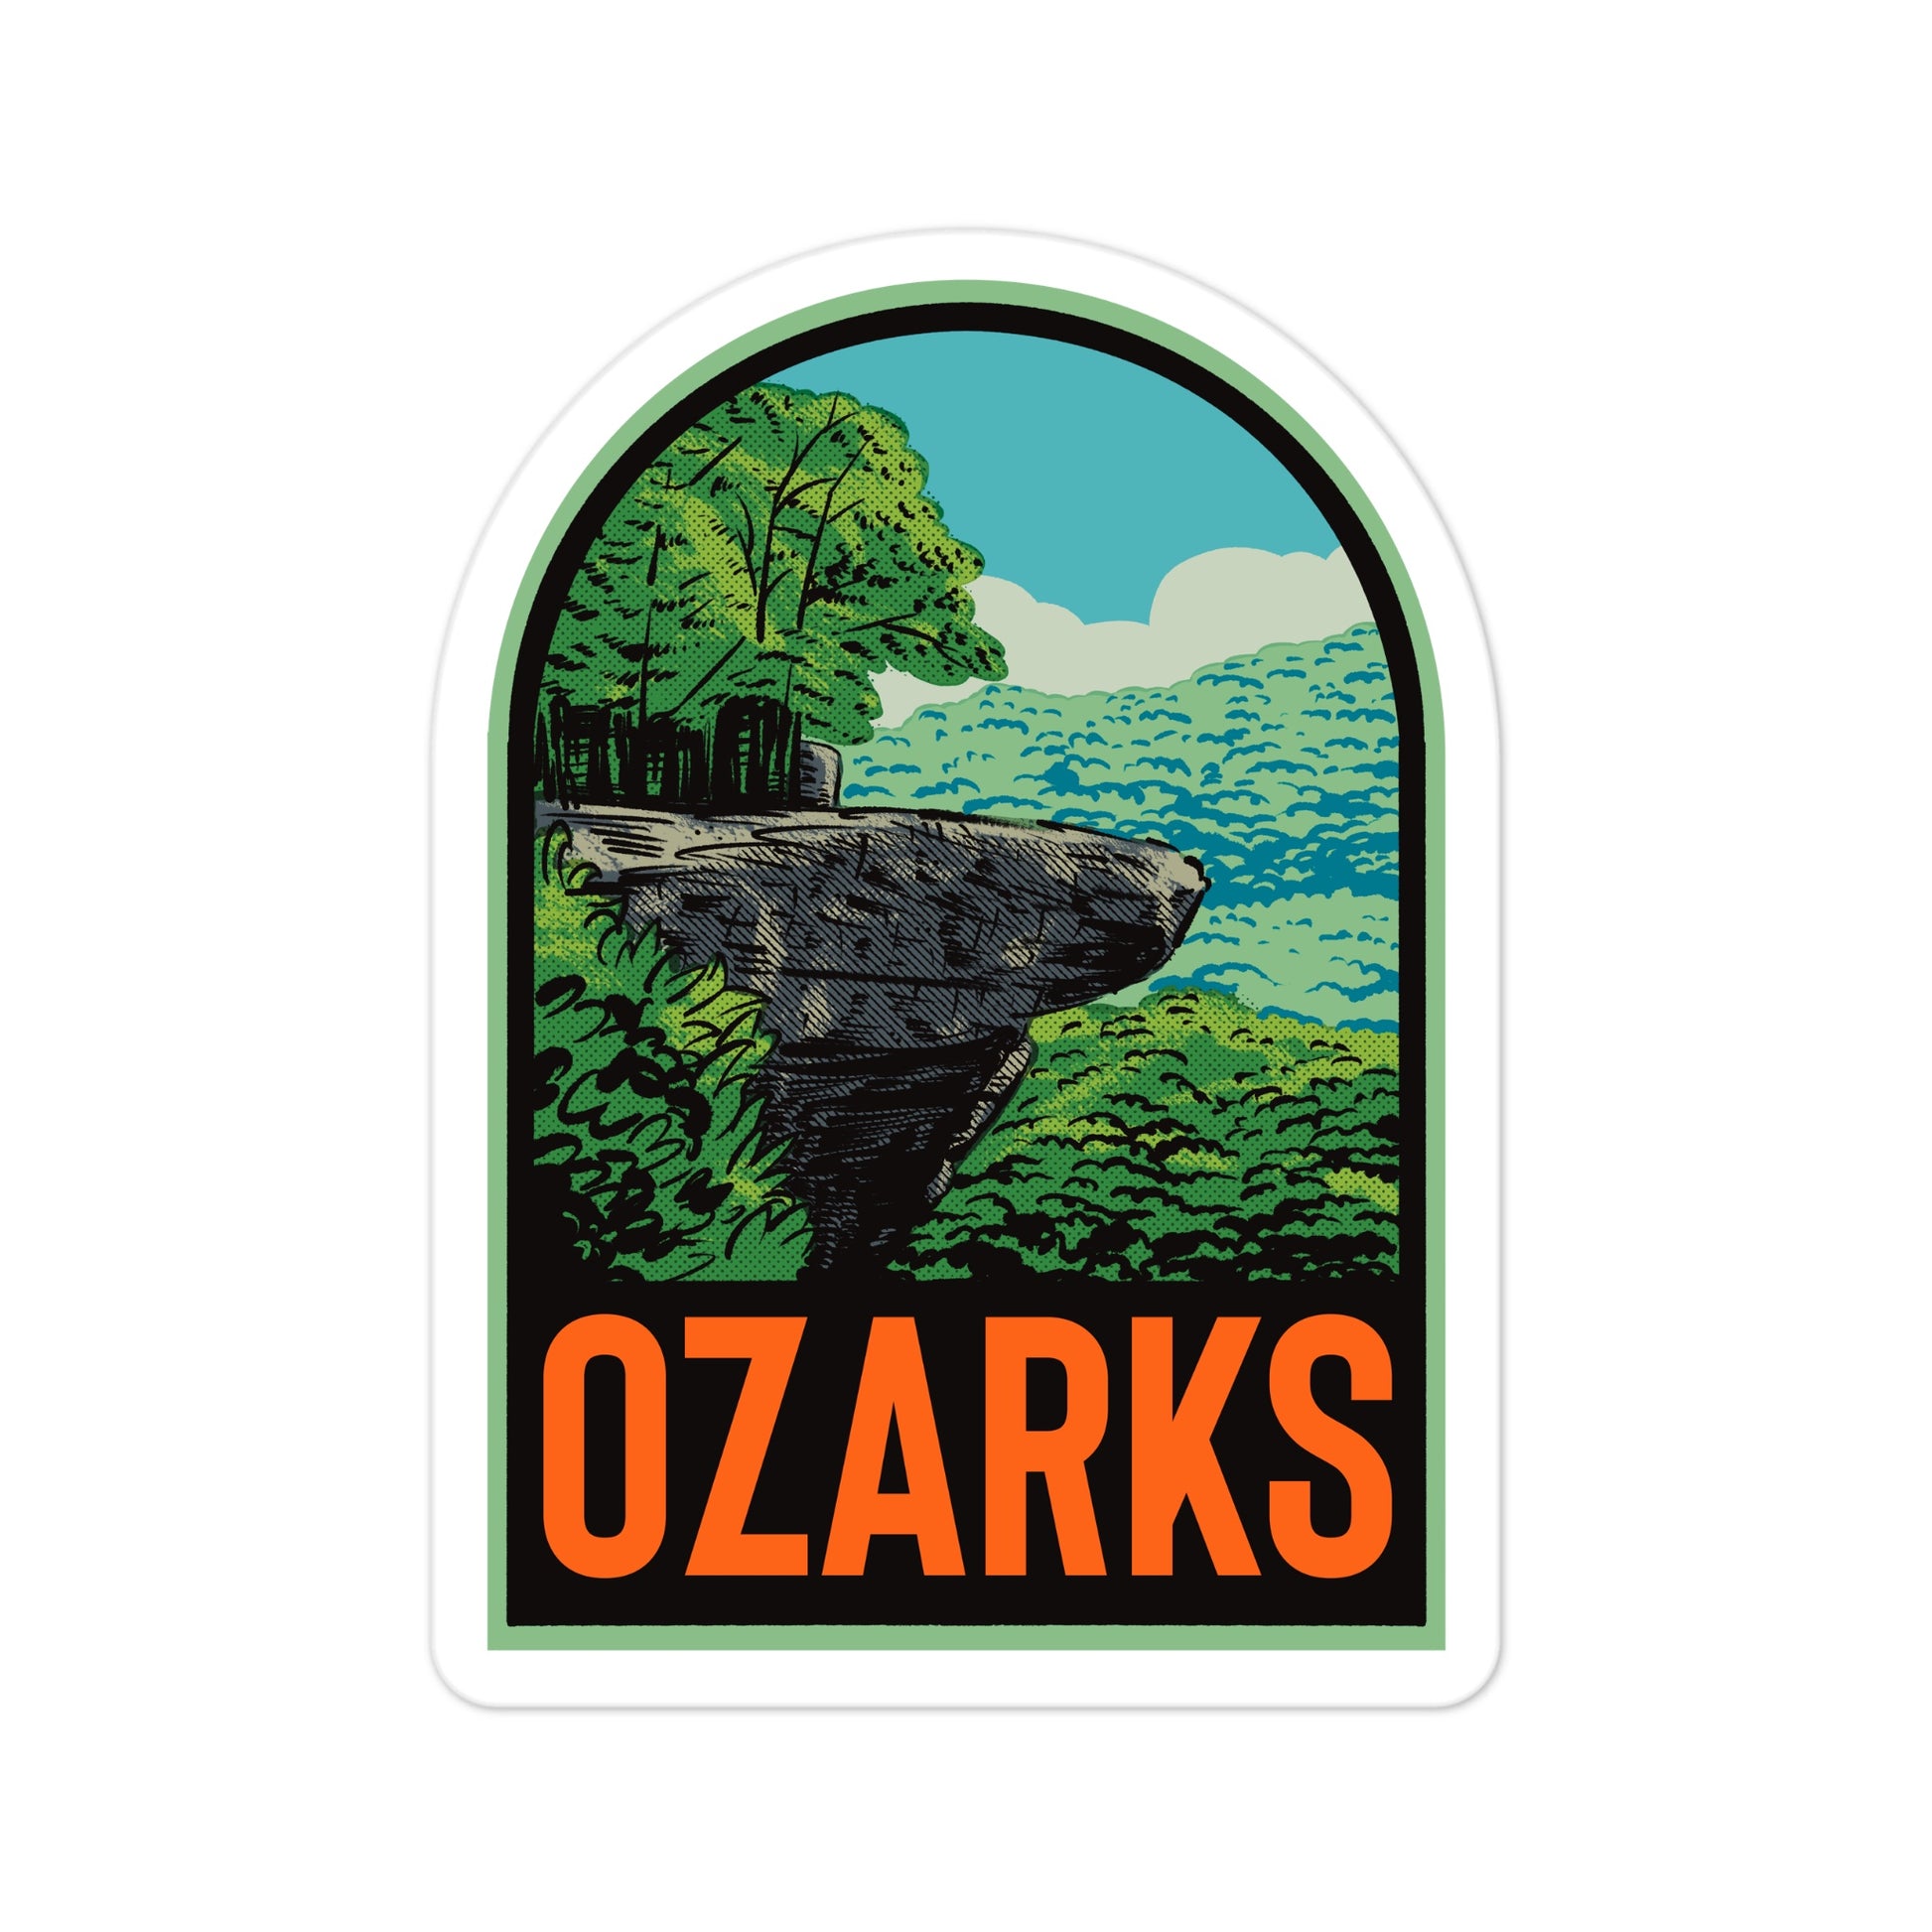 A sticker of The Ozarks